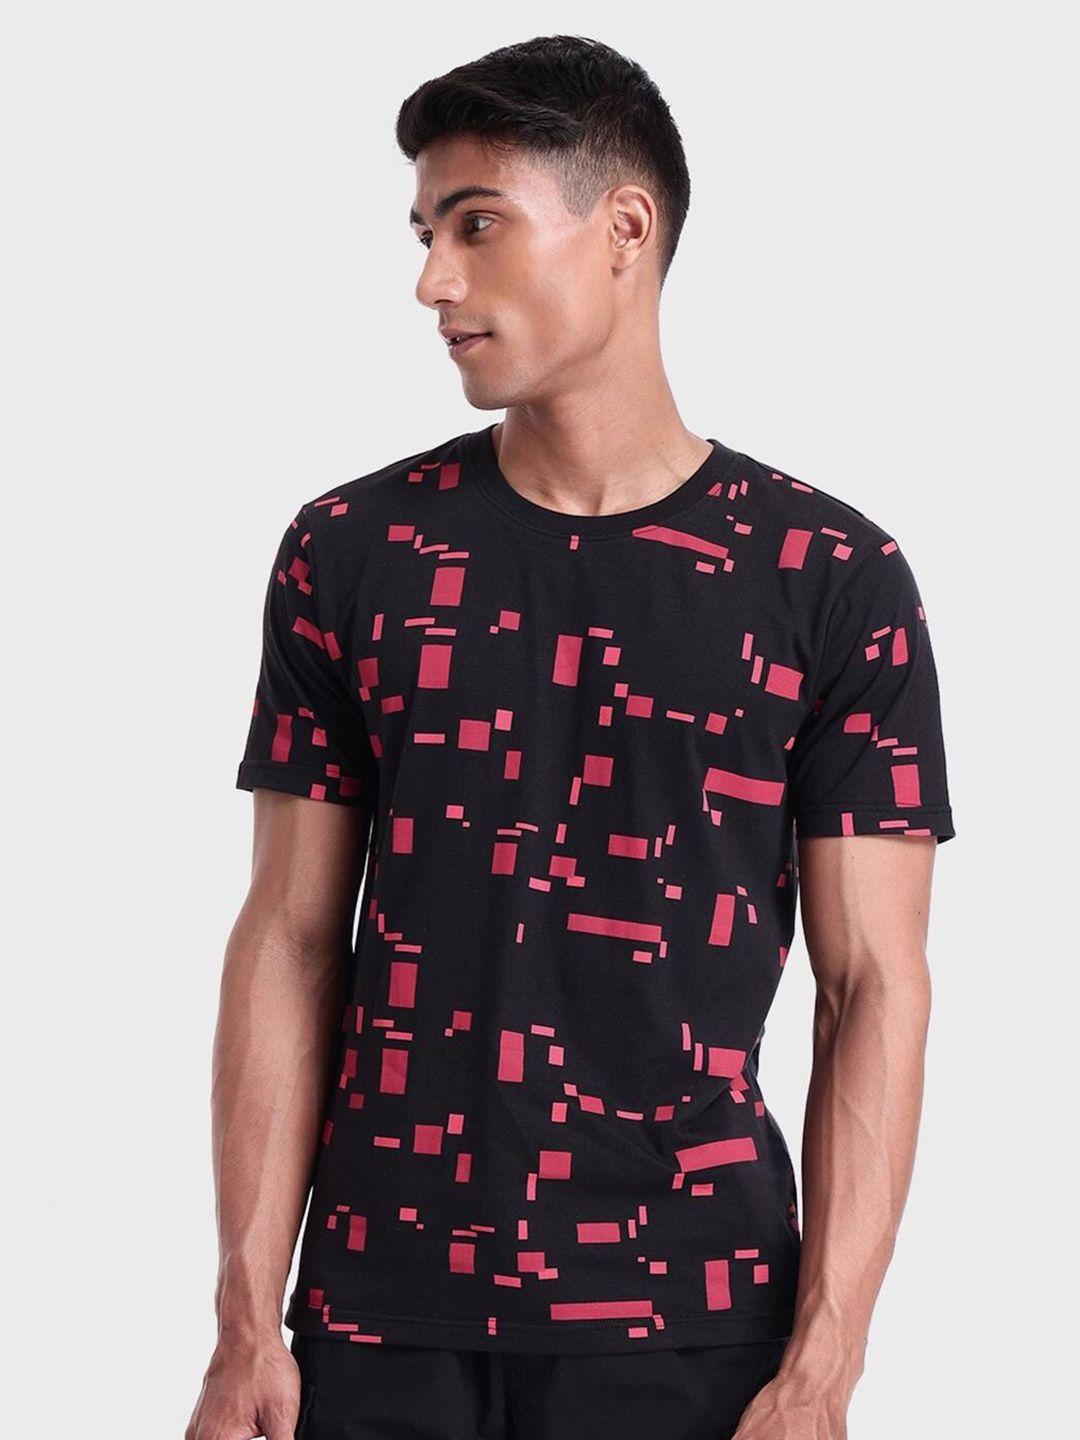 bewakoof men geometric printed cotton t-shirt